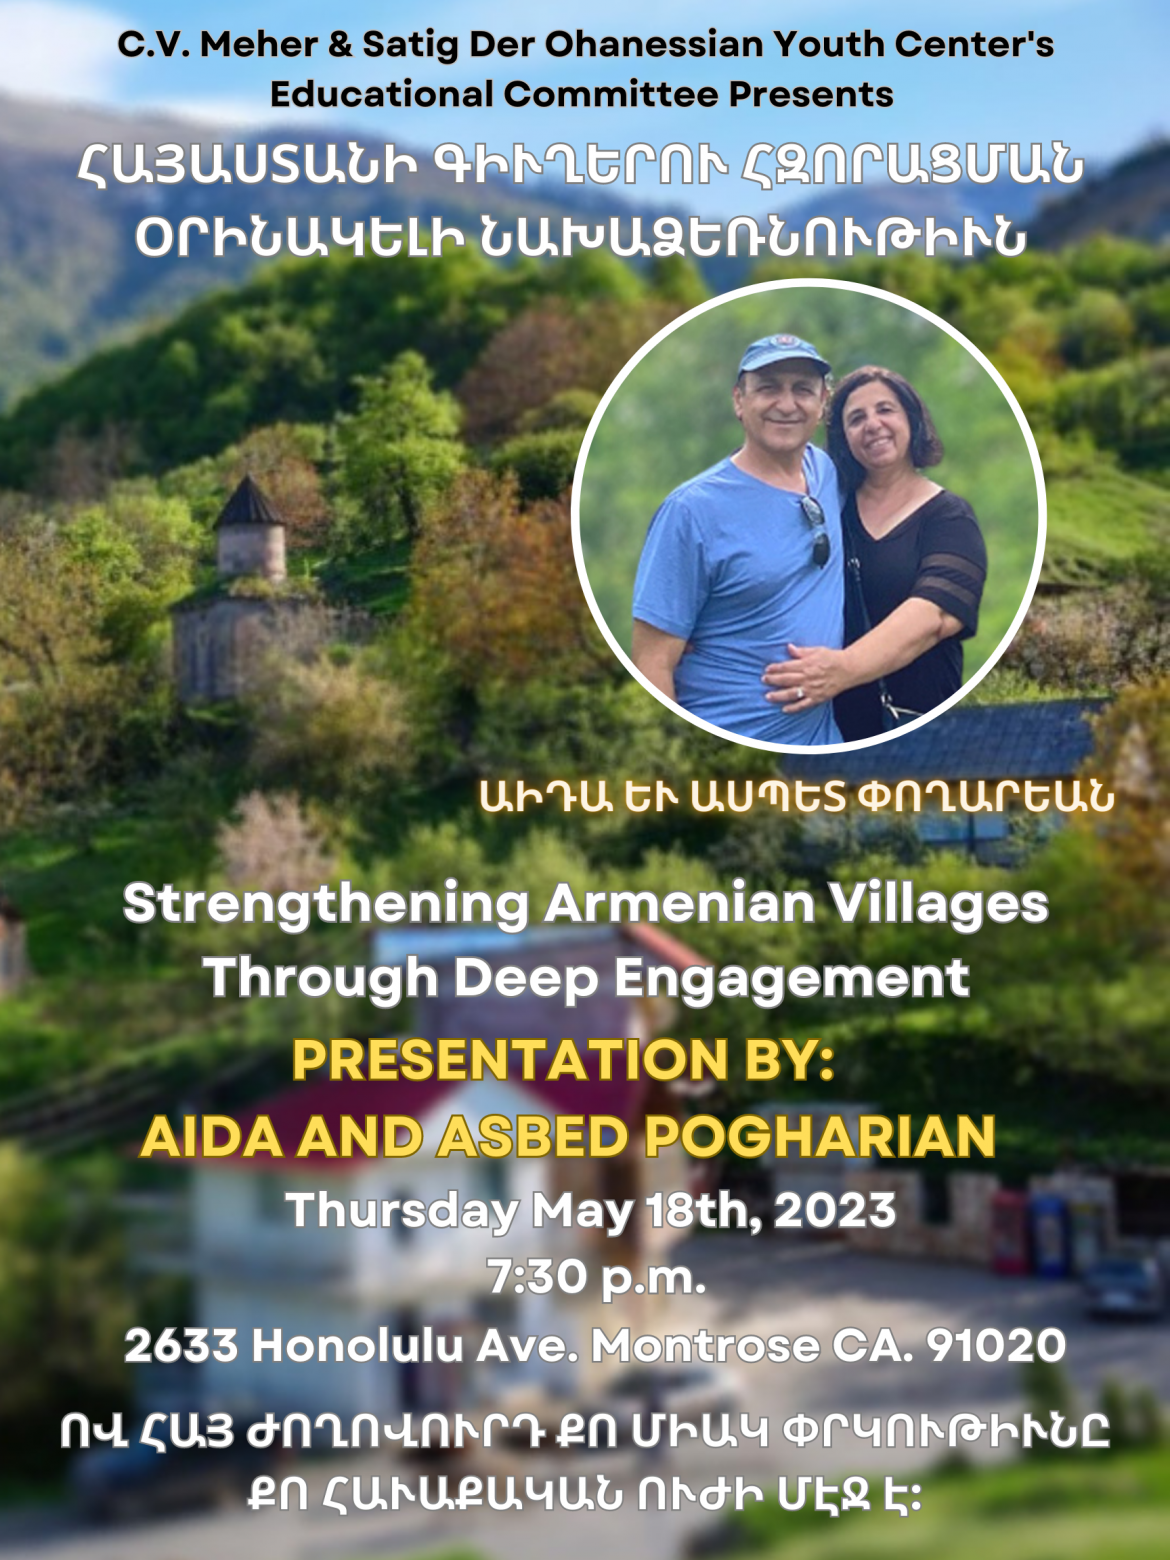 “Strengthening the Armenian Village Through Deep Engagement”